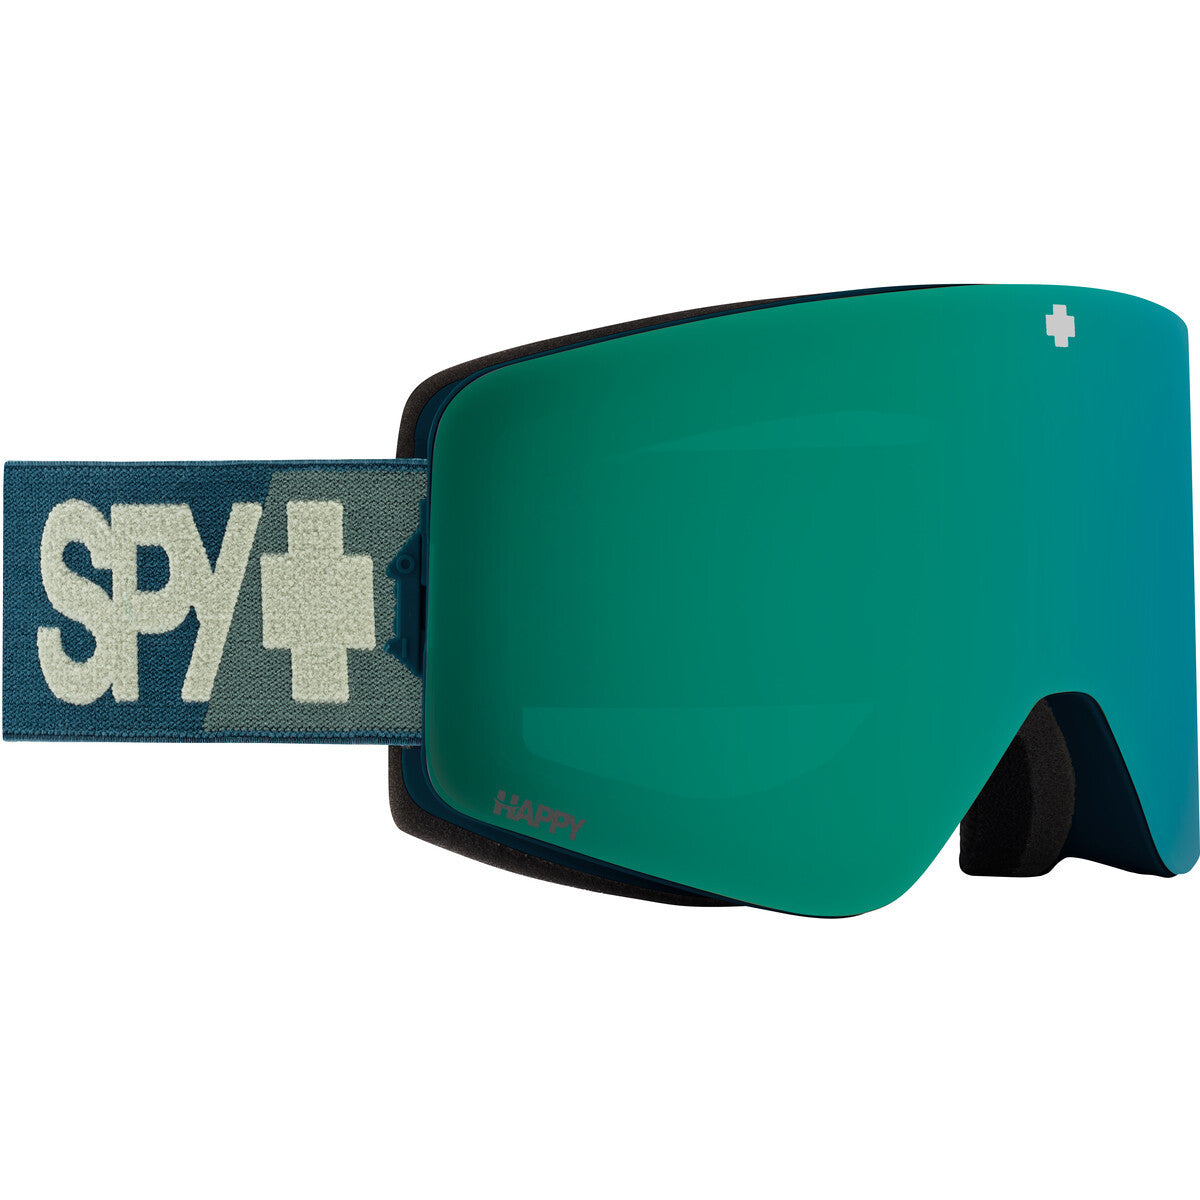 Spy Marauder Goggles  Seafoam Medium-Large M-L 54-61